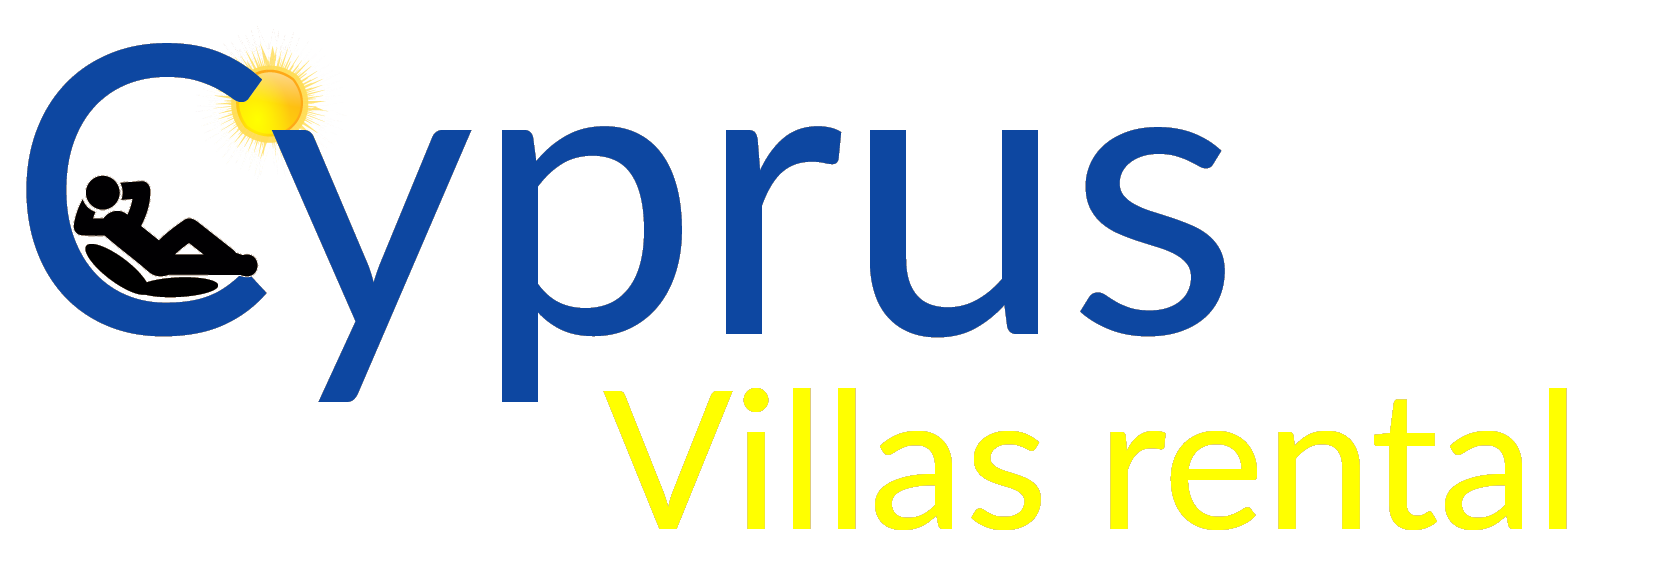 Cyprus Villas Rental - logo